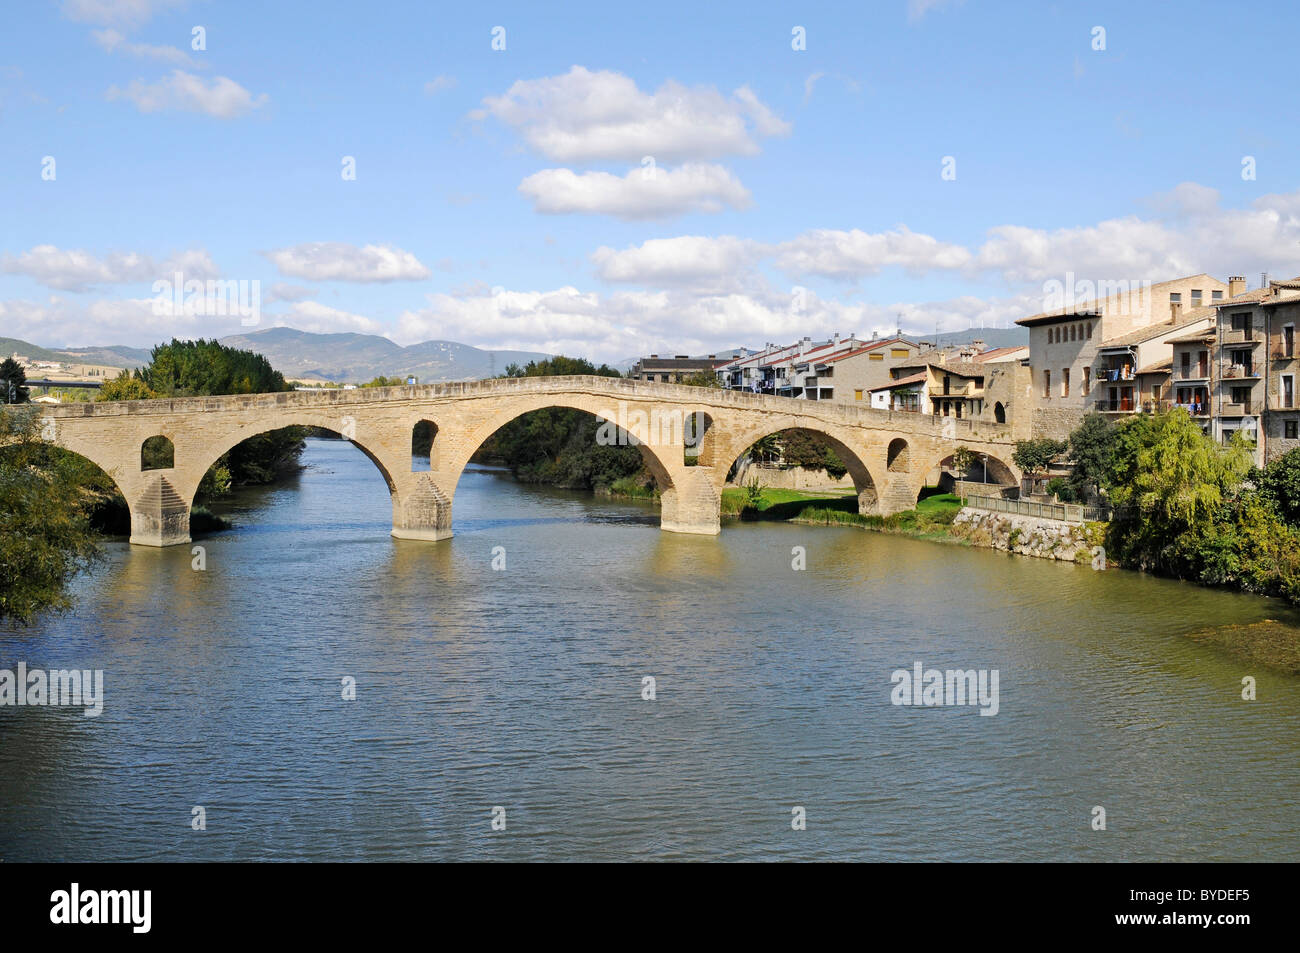 Romanica puente bridge over the Arga river, Camino de Santiago or the Way of St James, Puente la Reina, Pamplona, Navarra, Spain Stock Photo